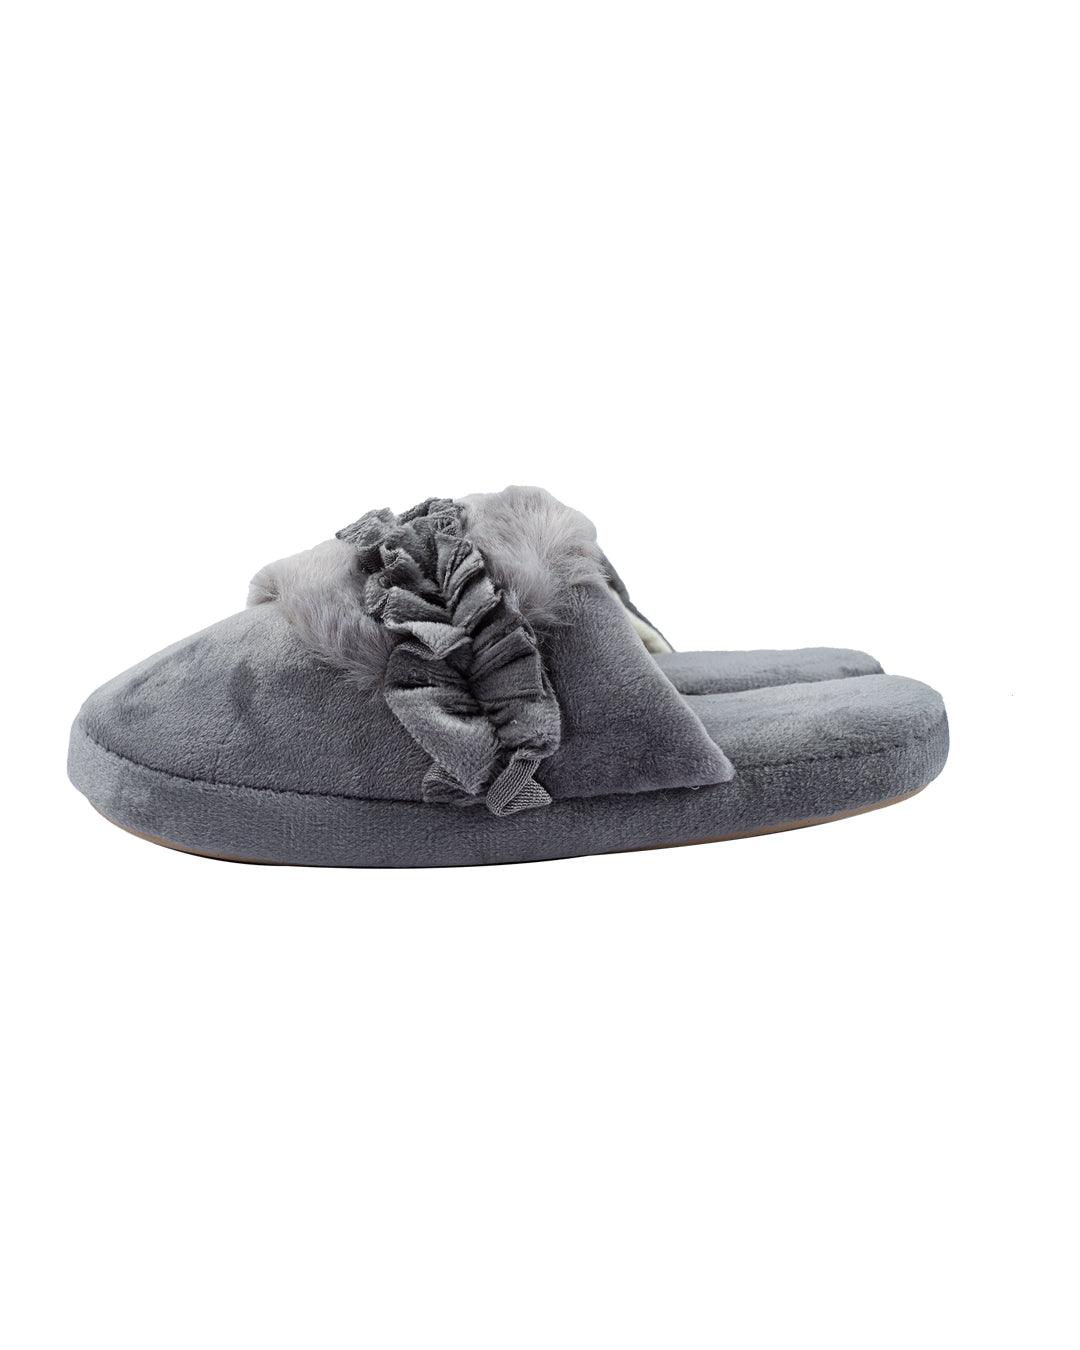 Donati Woman Fluffy Slippers, Grey, Polyester - MARKET 99